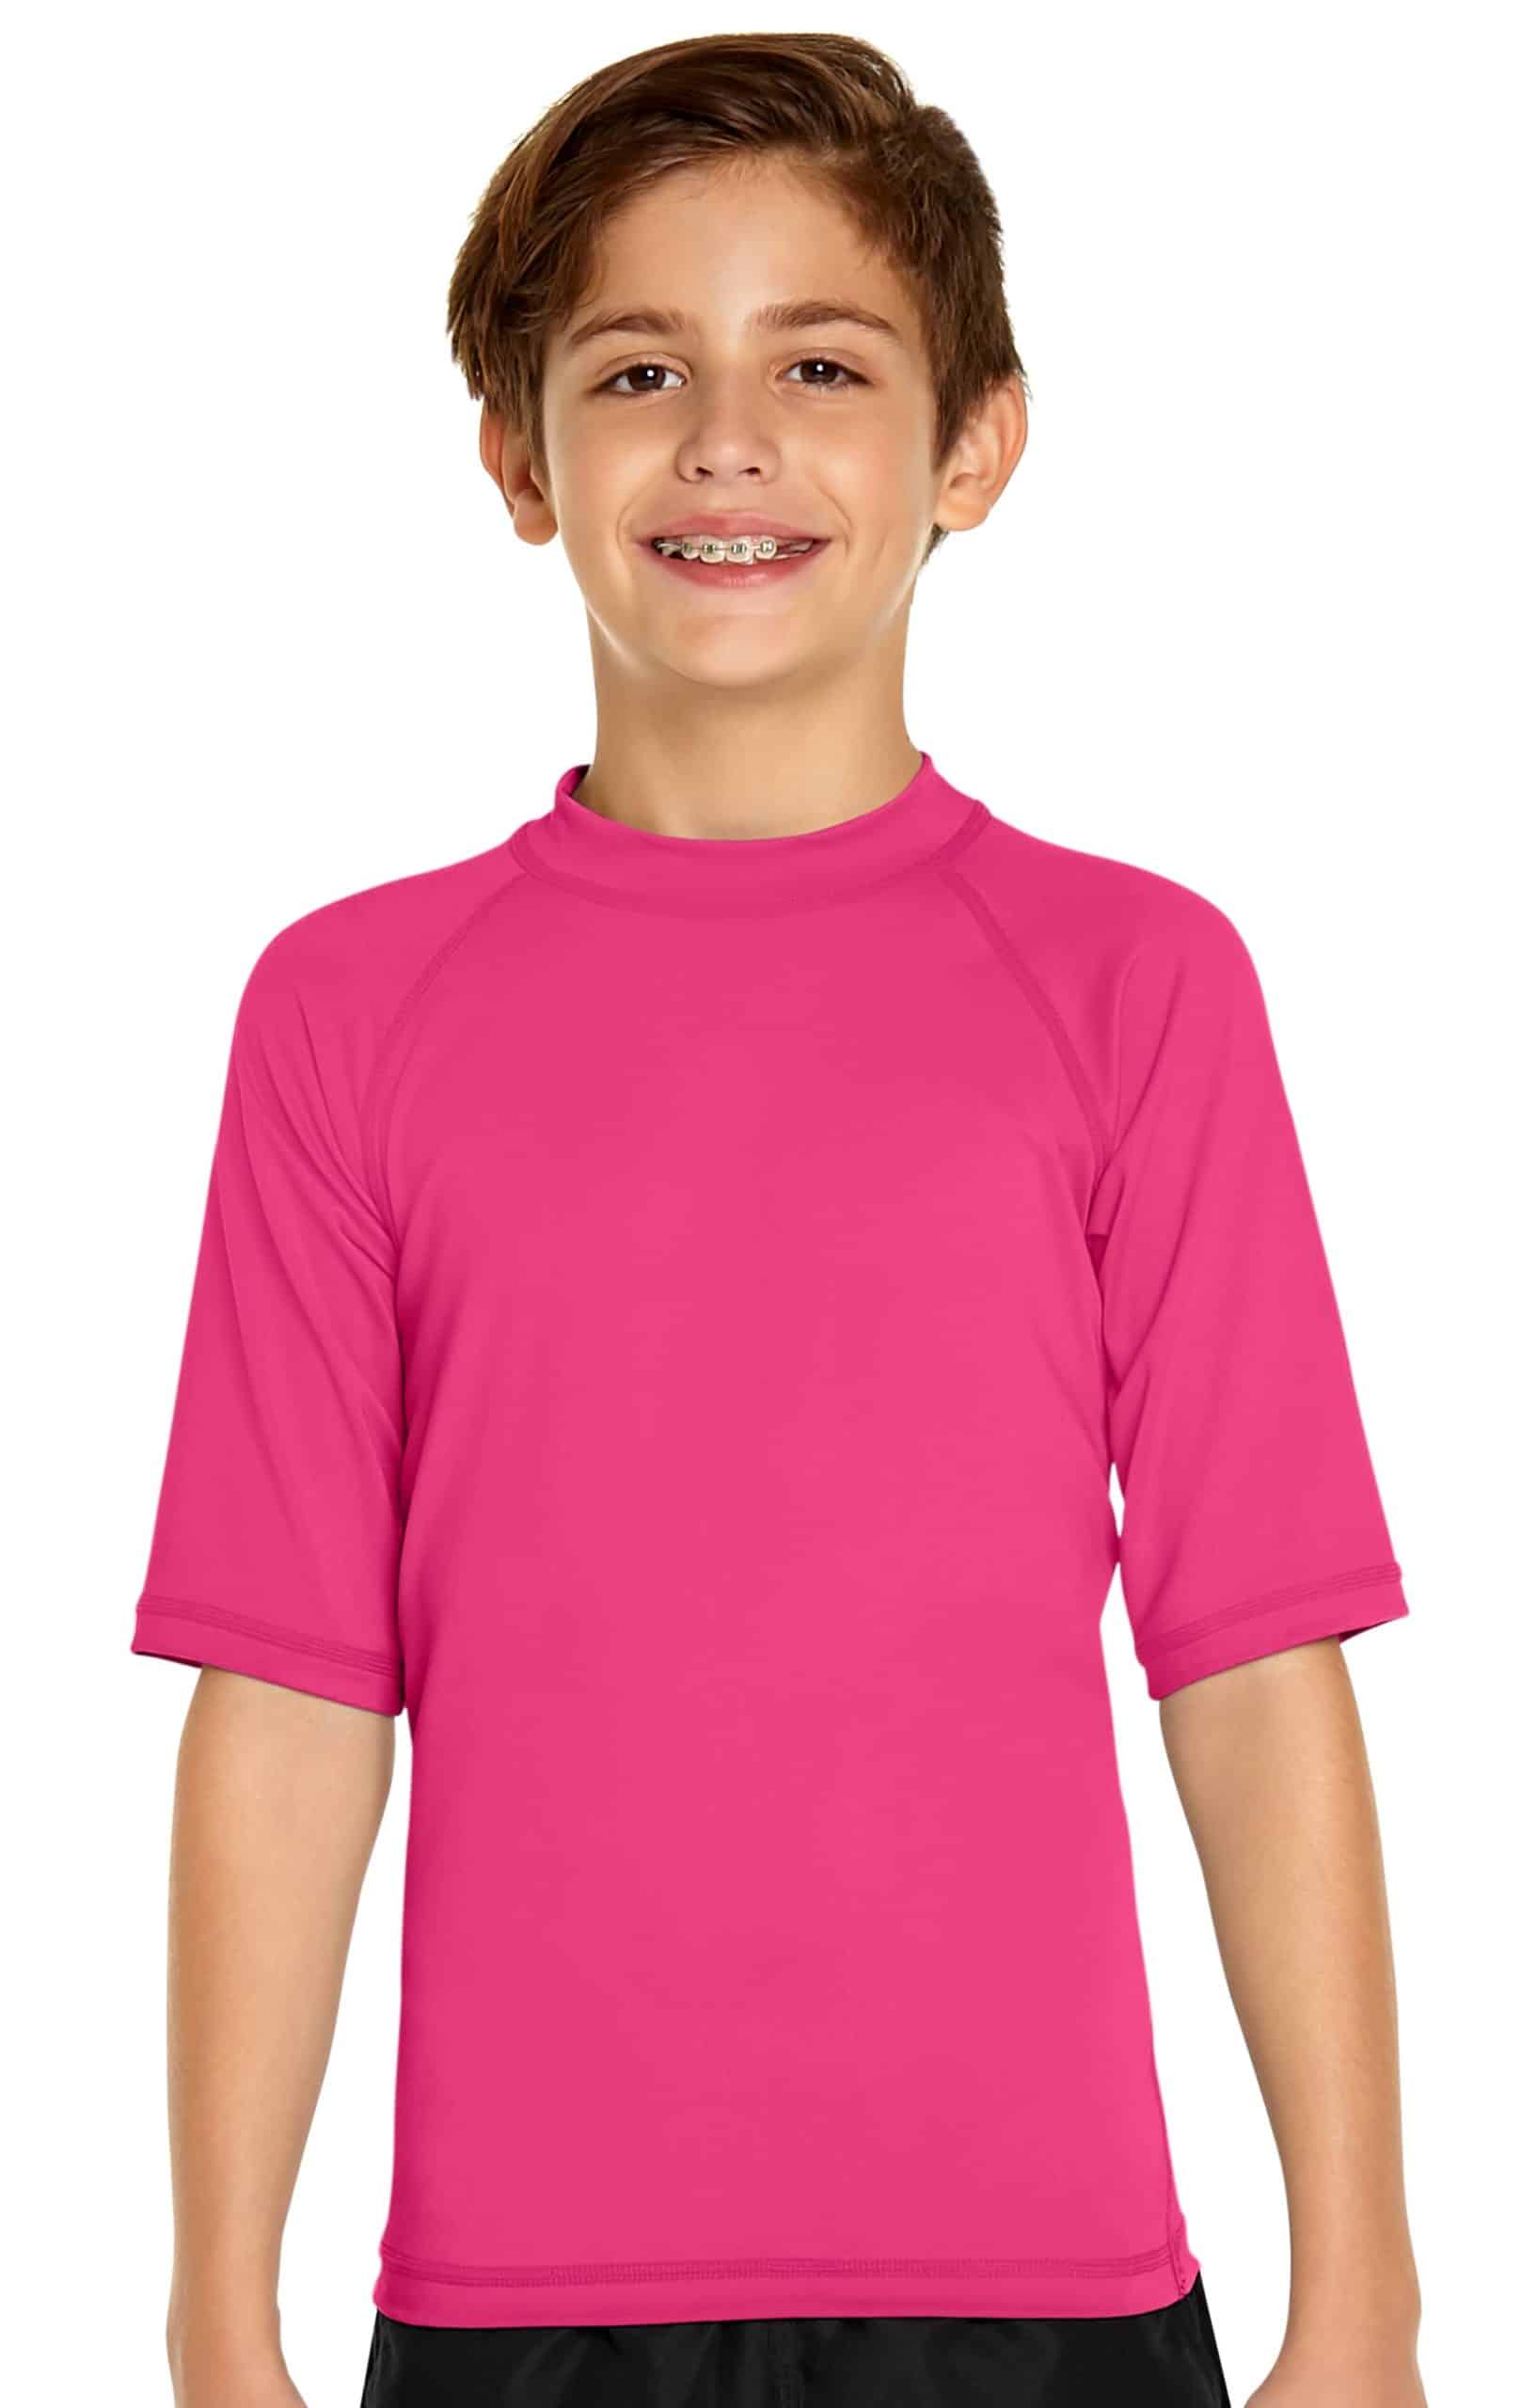 Girl's Short Sleeve Rash Guard - Pink - Wet Effect, Inc.